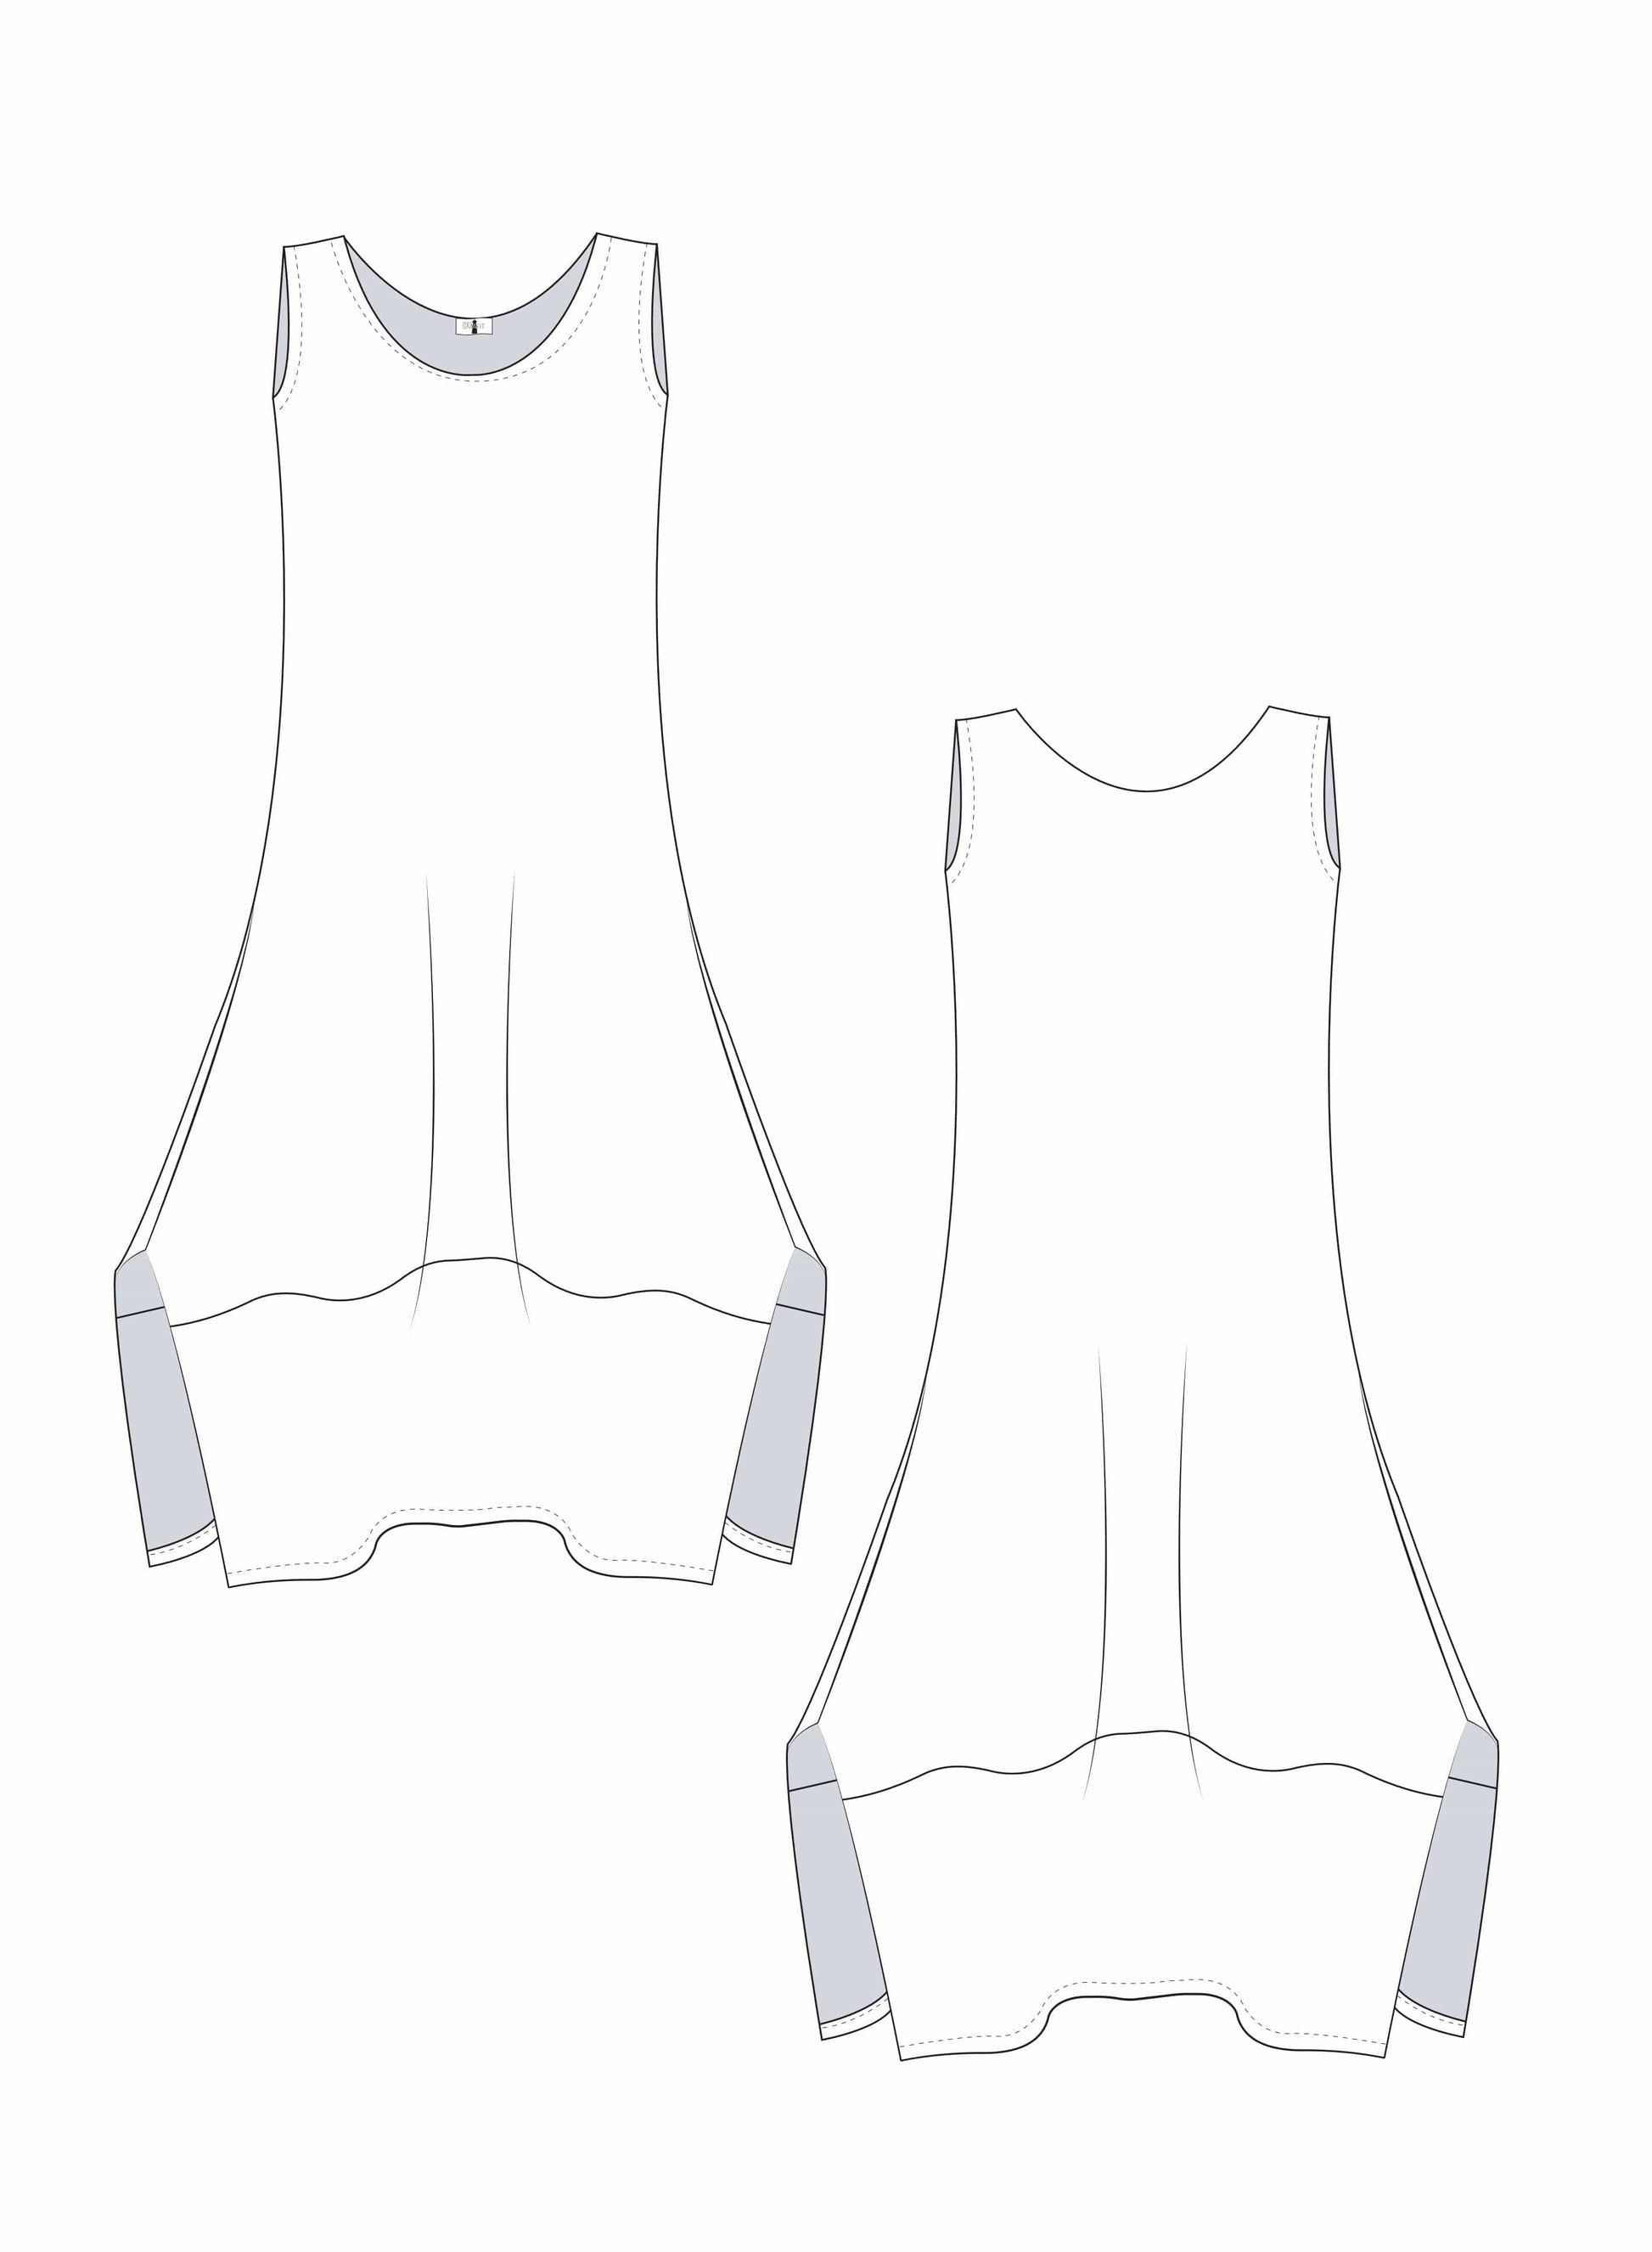 BEVERLY SMART robe FLARE, robe simple en forme trapèze